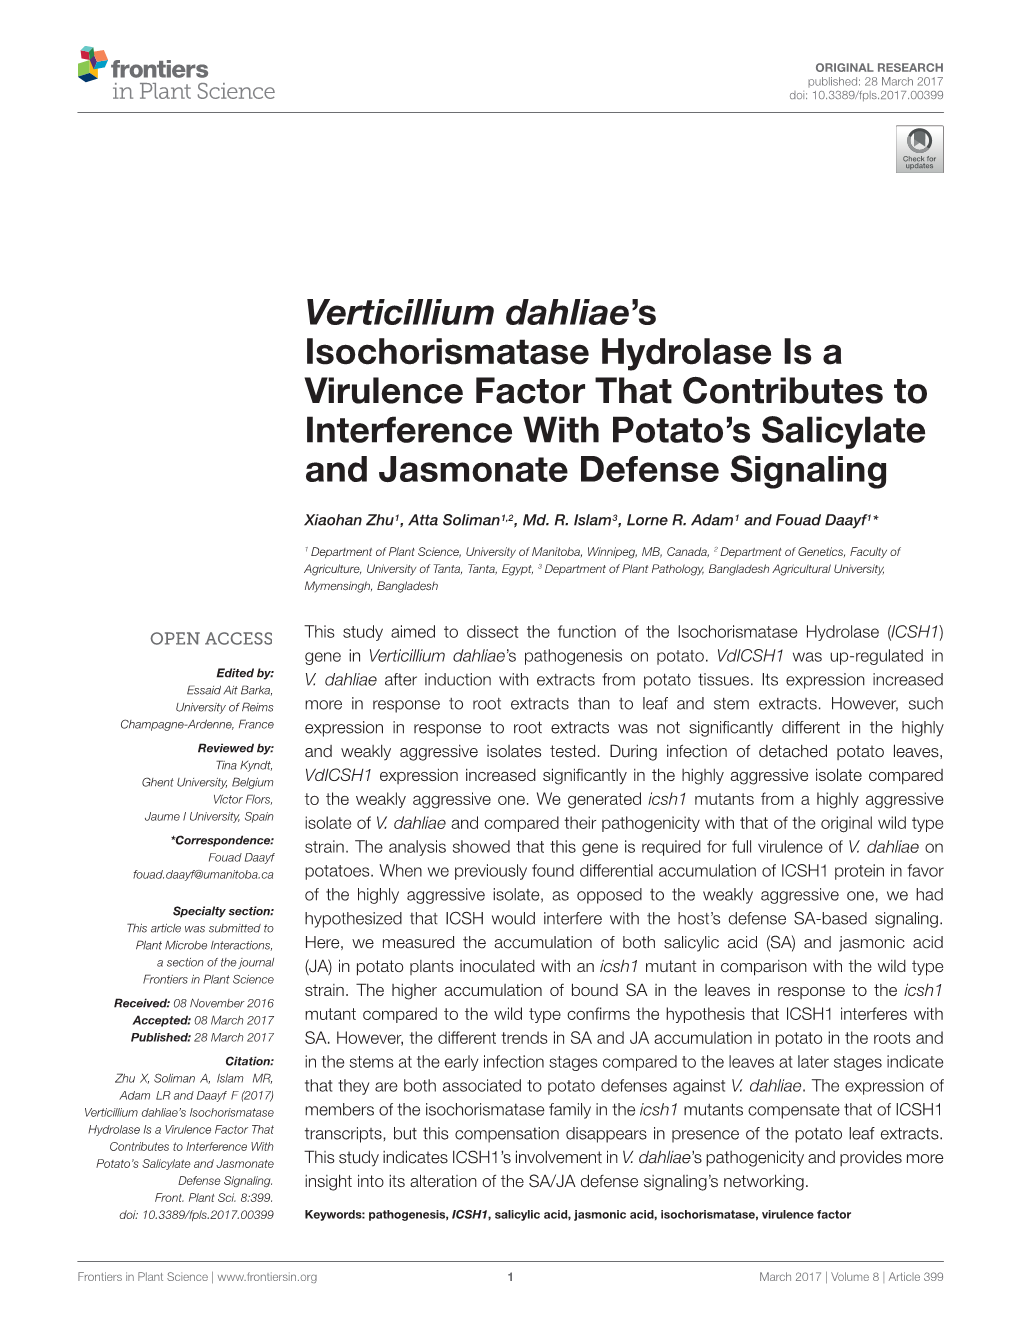 Verticillium Dahliae's Isochorismatase Hydrolase Is a Virulence Factor